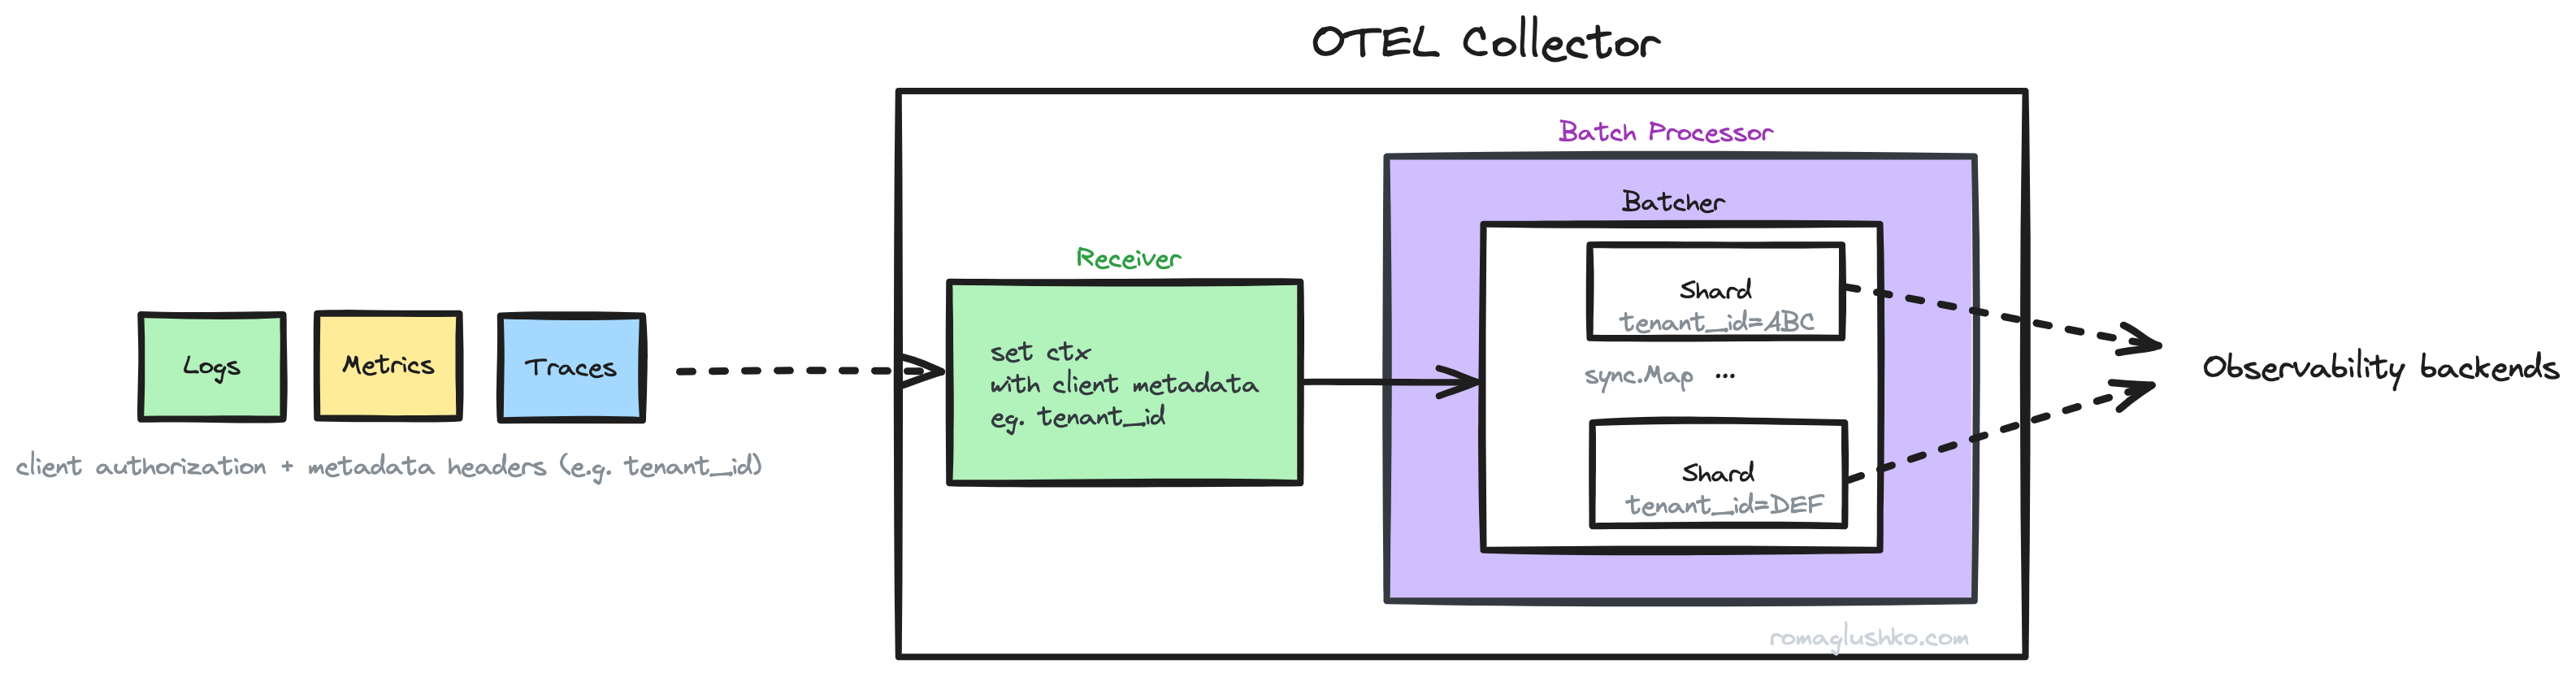 The OTel Collector Batch Processor